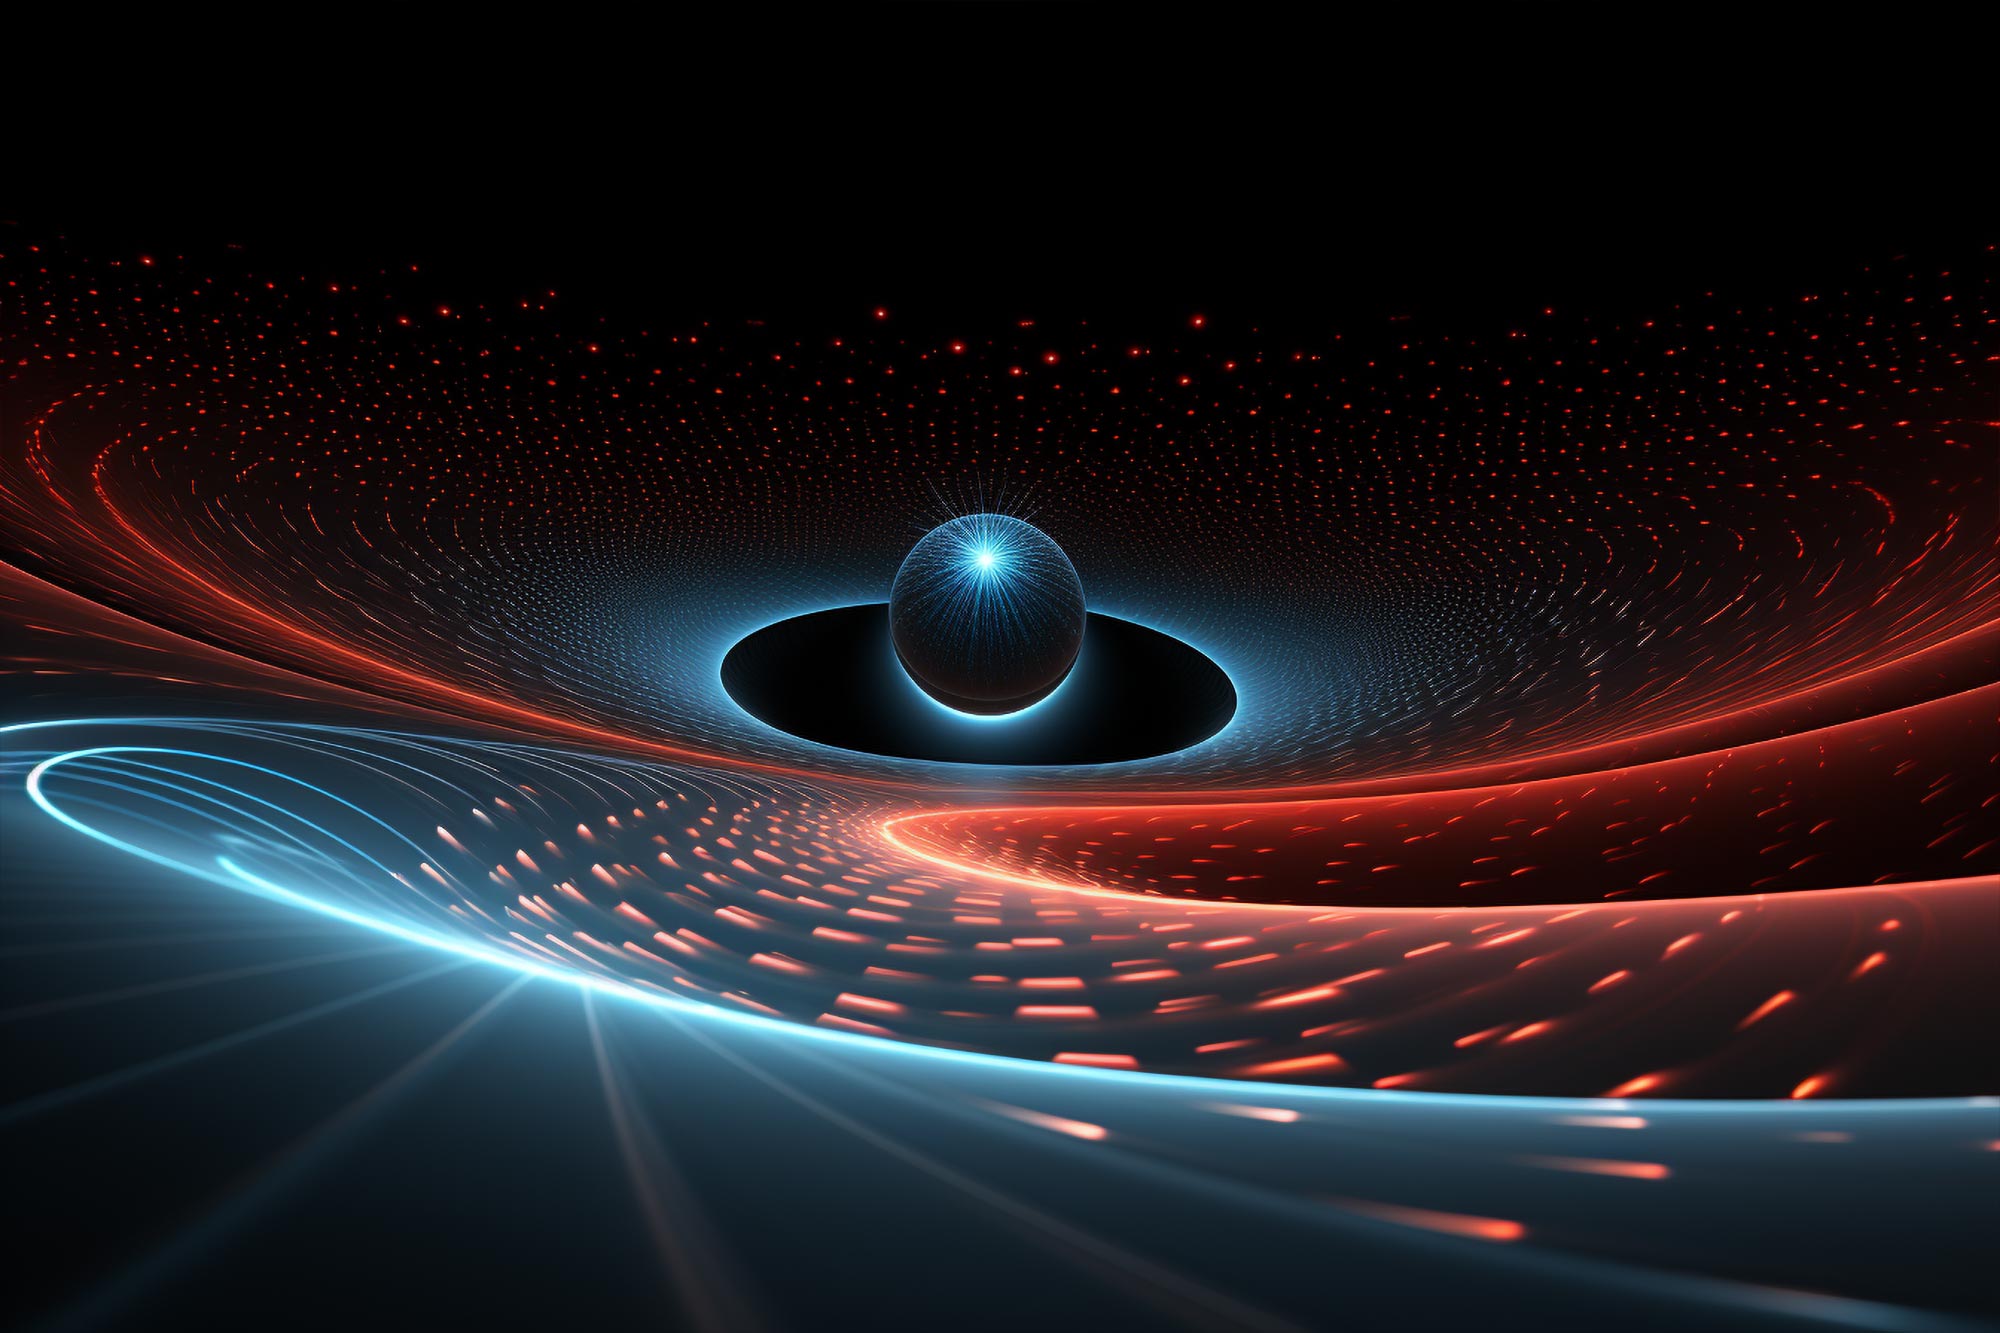 Gravitational waves astrophysics concept art